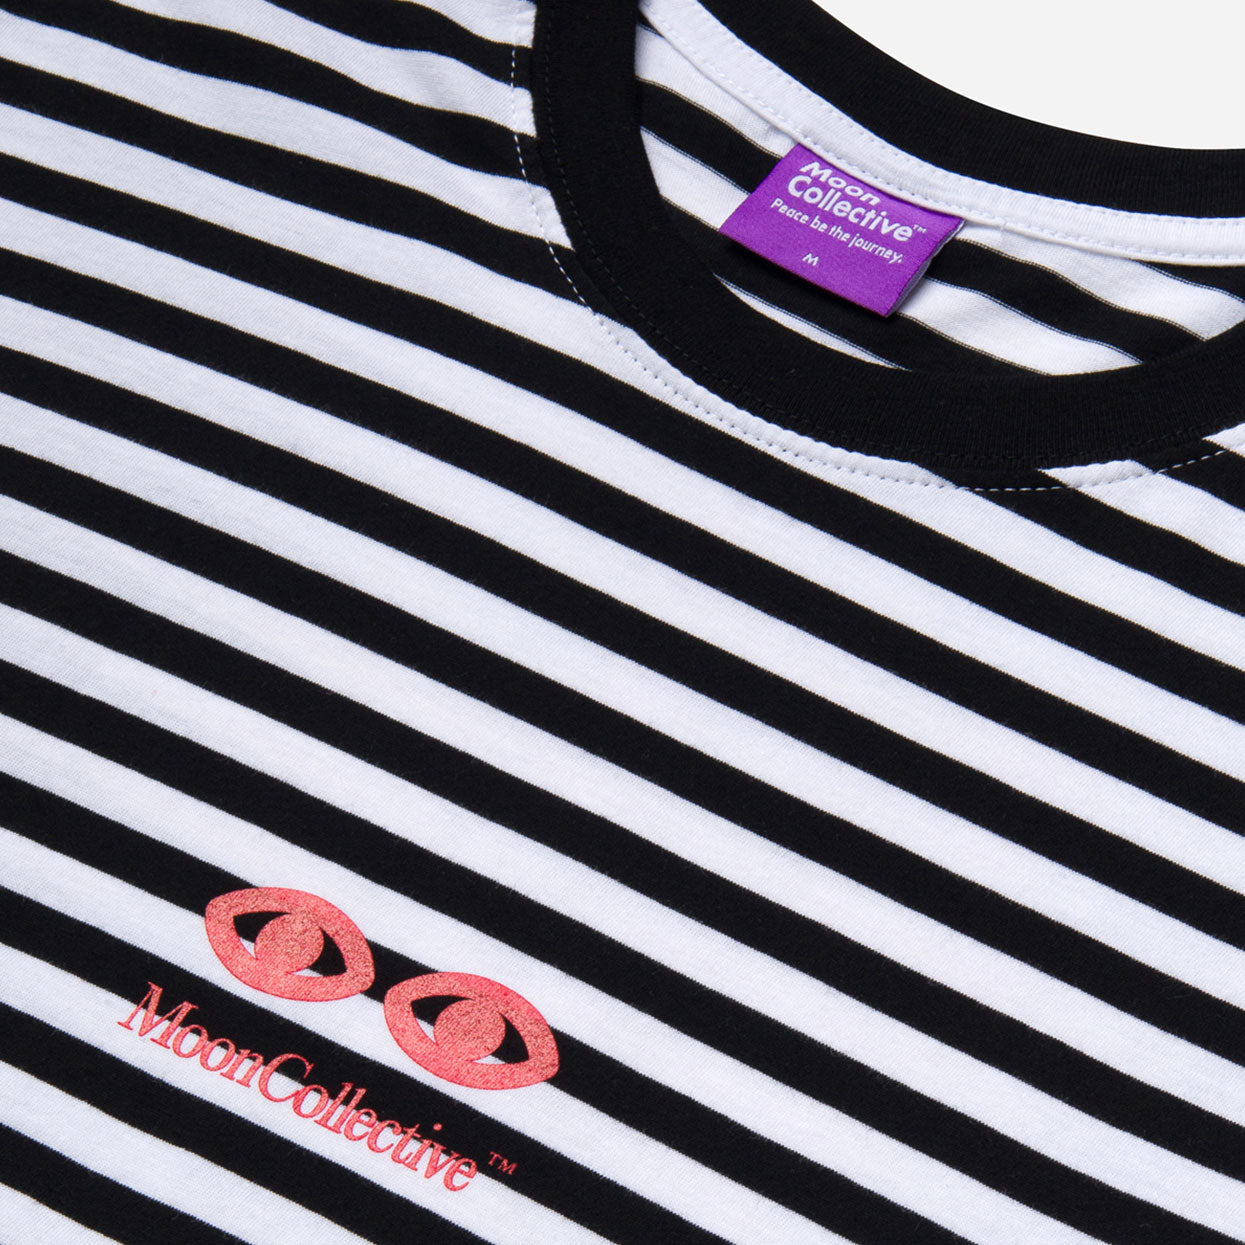 Logo + Cat Shirt - Striped